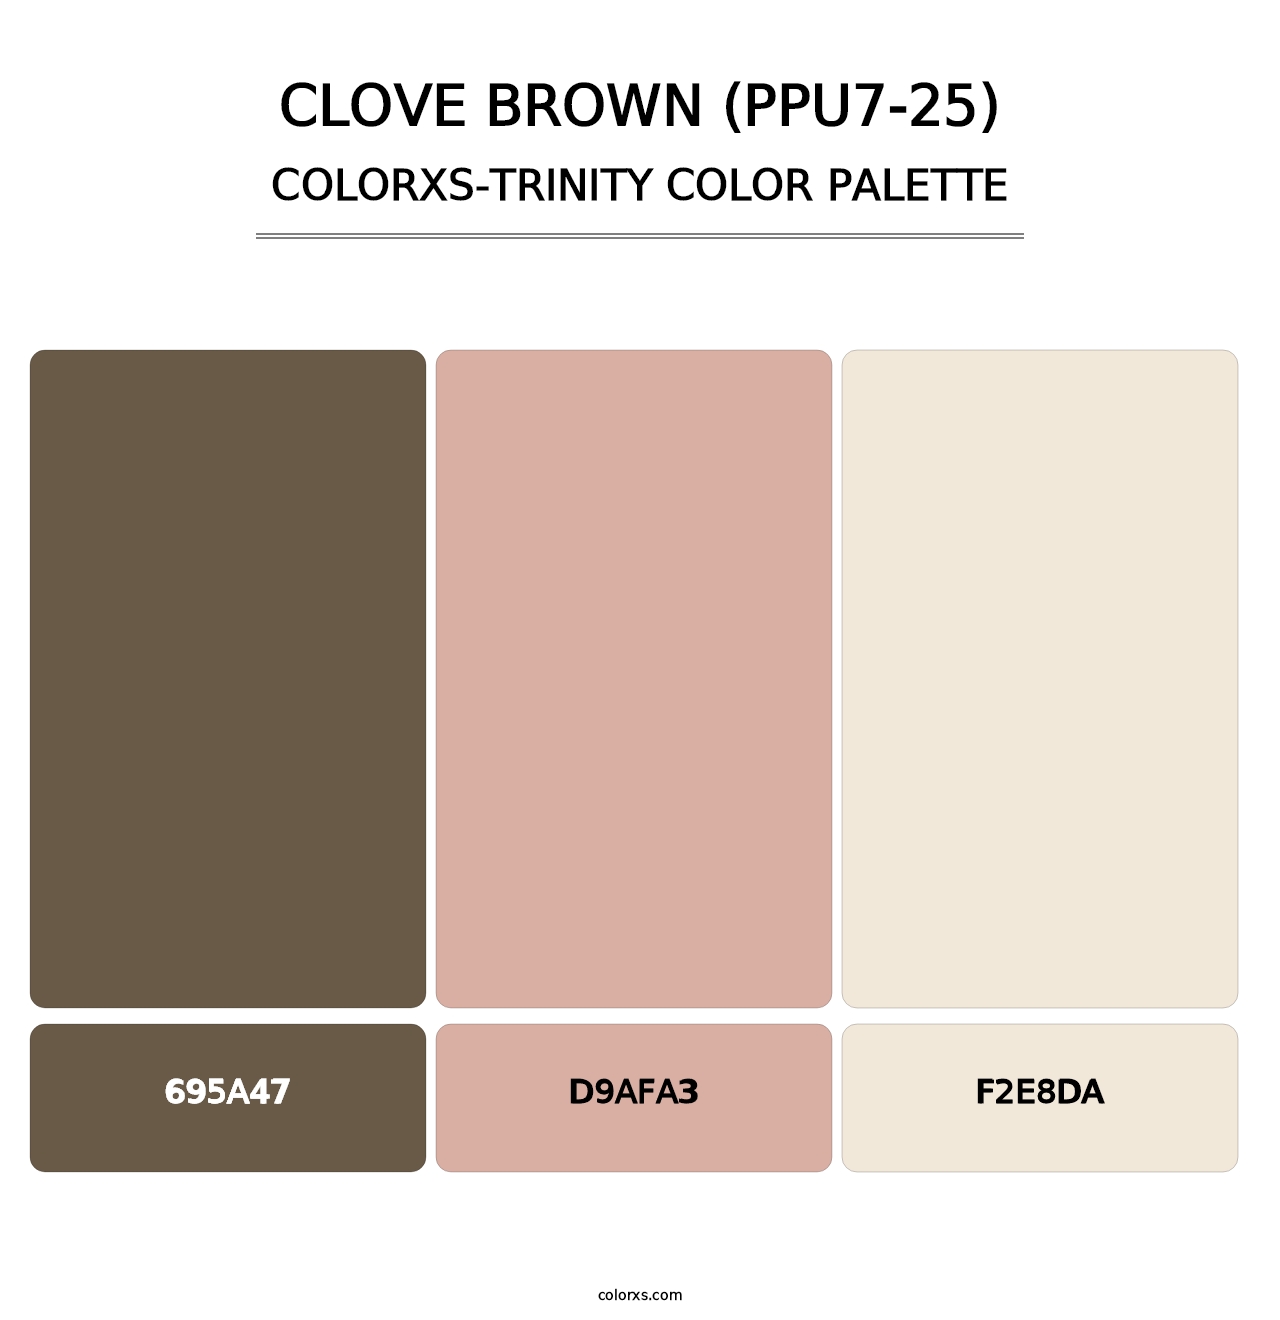 Clove Brown (PPU7-25) - Colorxs Trinity Palette